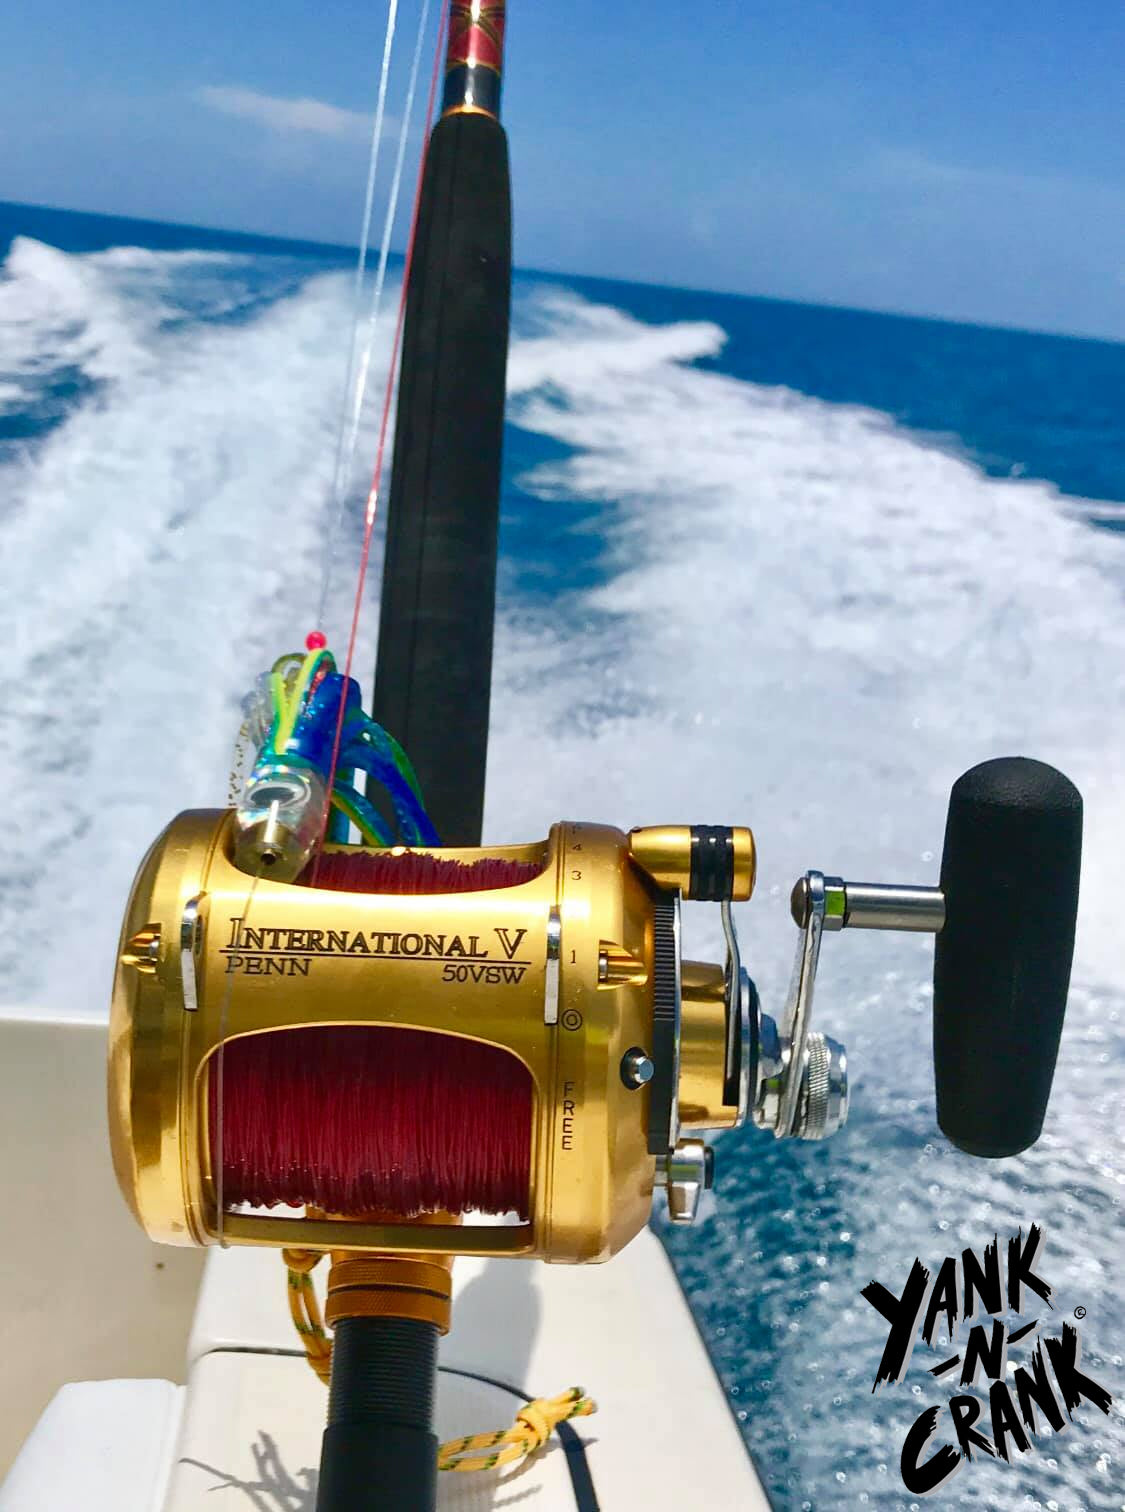 Yank-N-Crank Extreme Fishing – YankNCrank